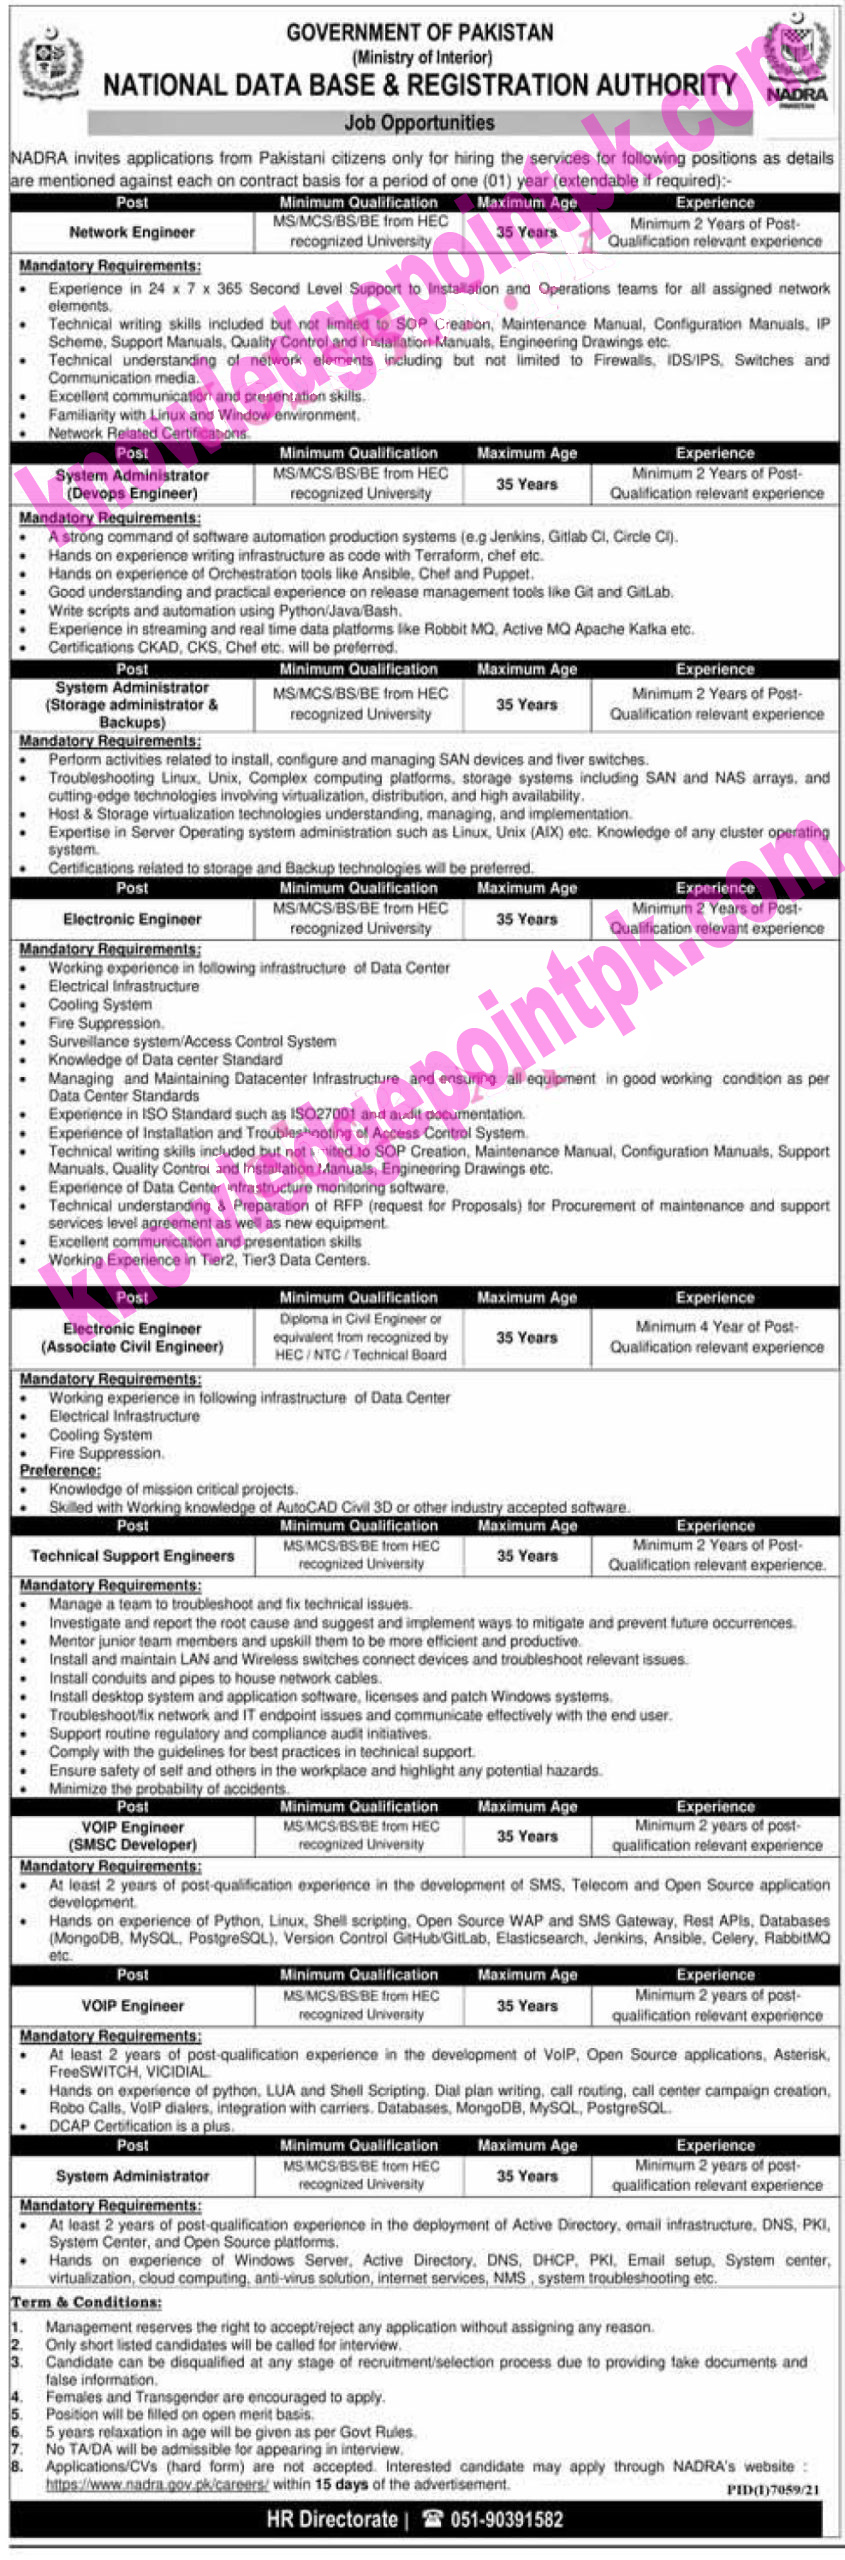 NADRA Jobs 2022 Ministry of Home Affairs – Apply at www.nadra.gov.pk